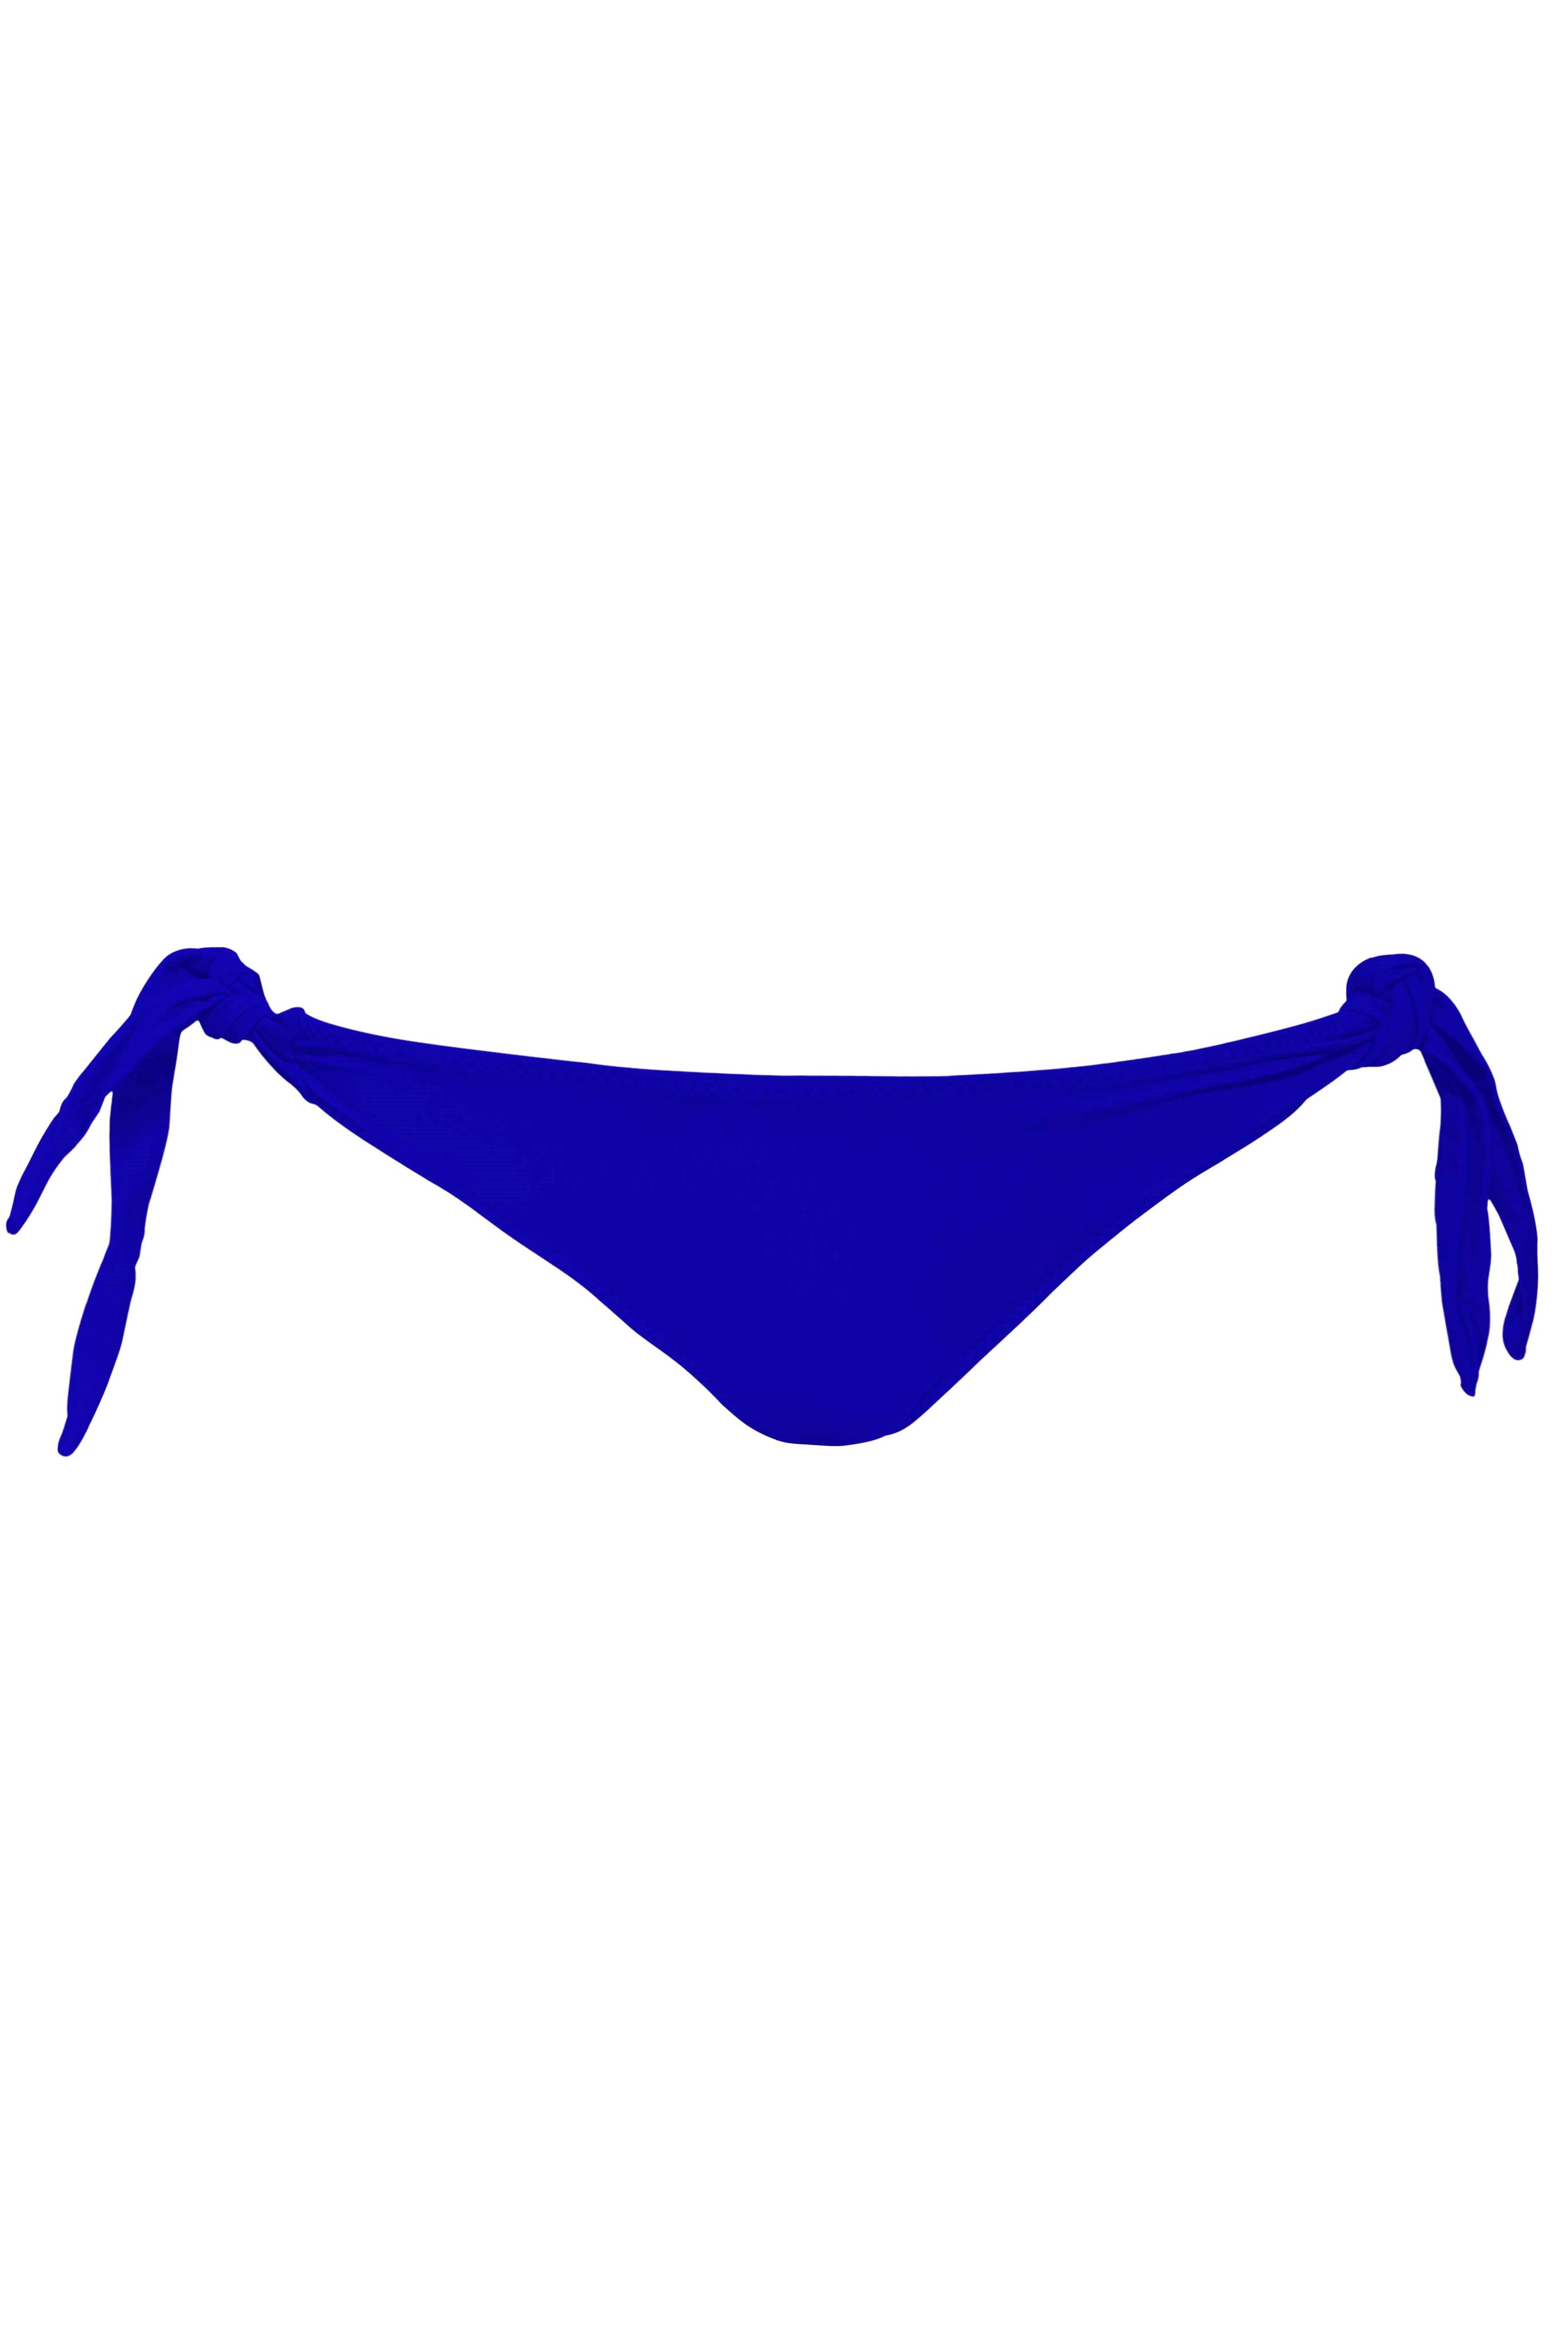 Phax Blauw String Bikini Broekje